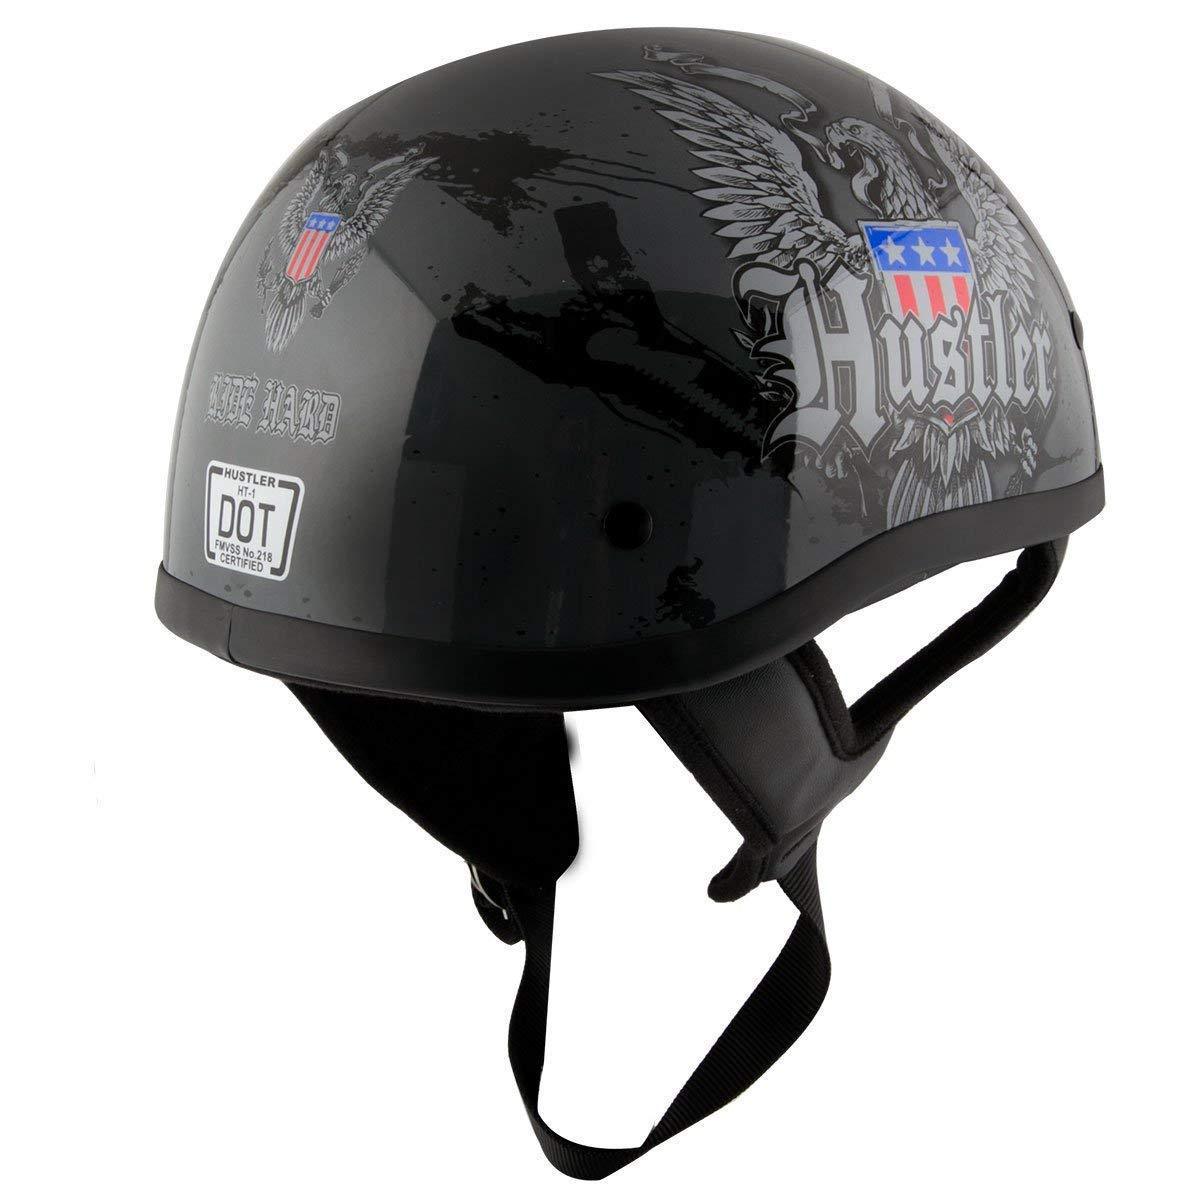 Outlaw Helmets HT1 Hustler Glossy Gray Ride Hard Half Helmet